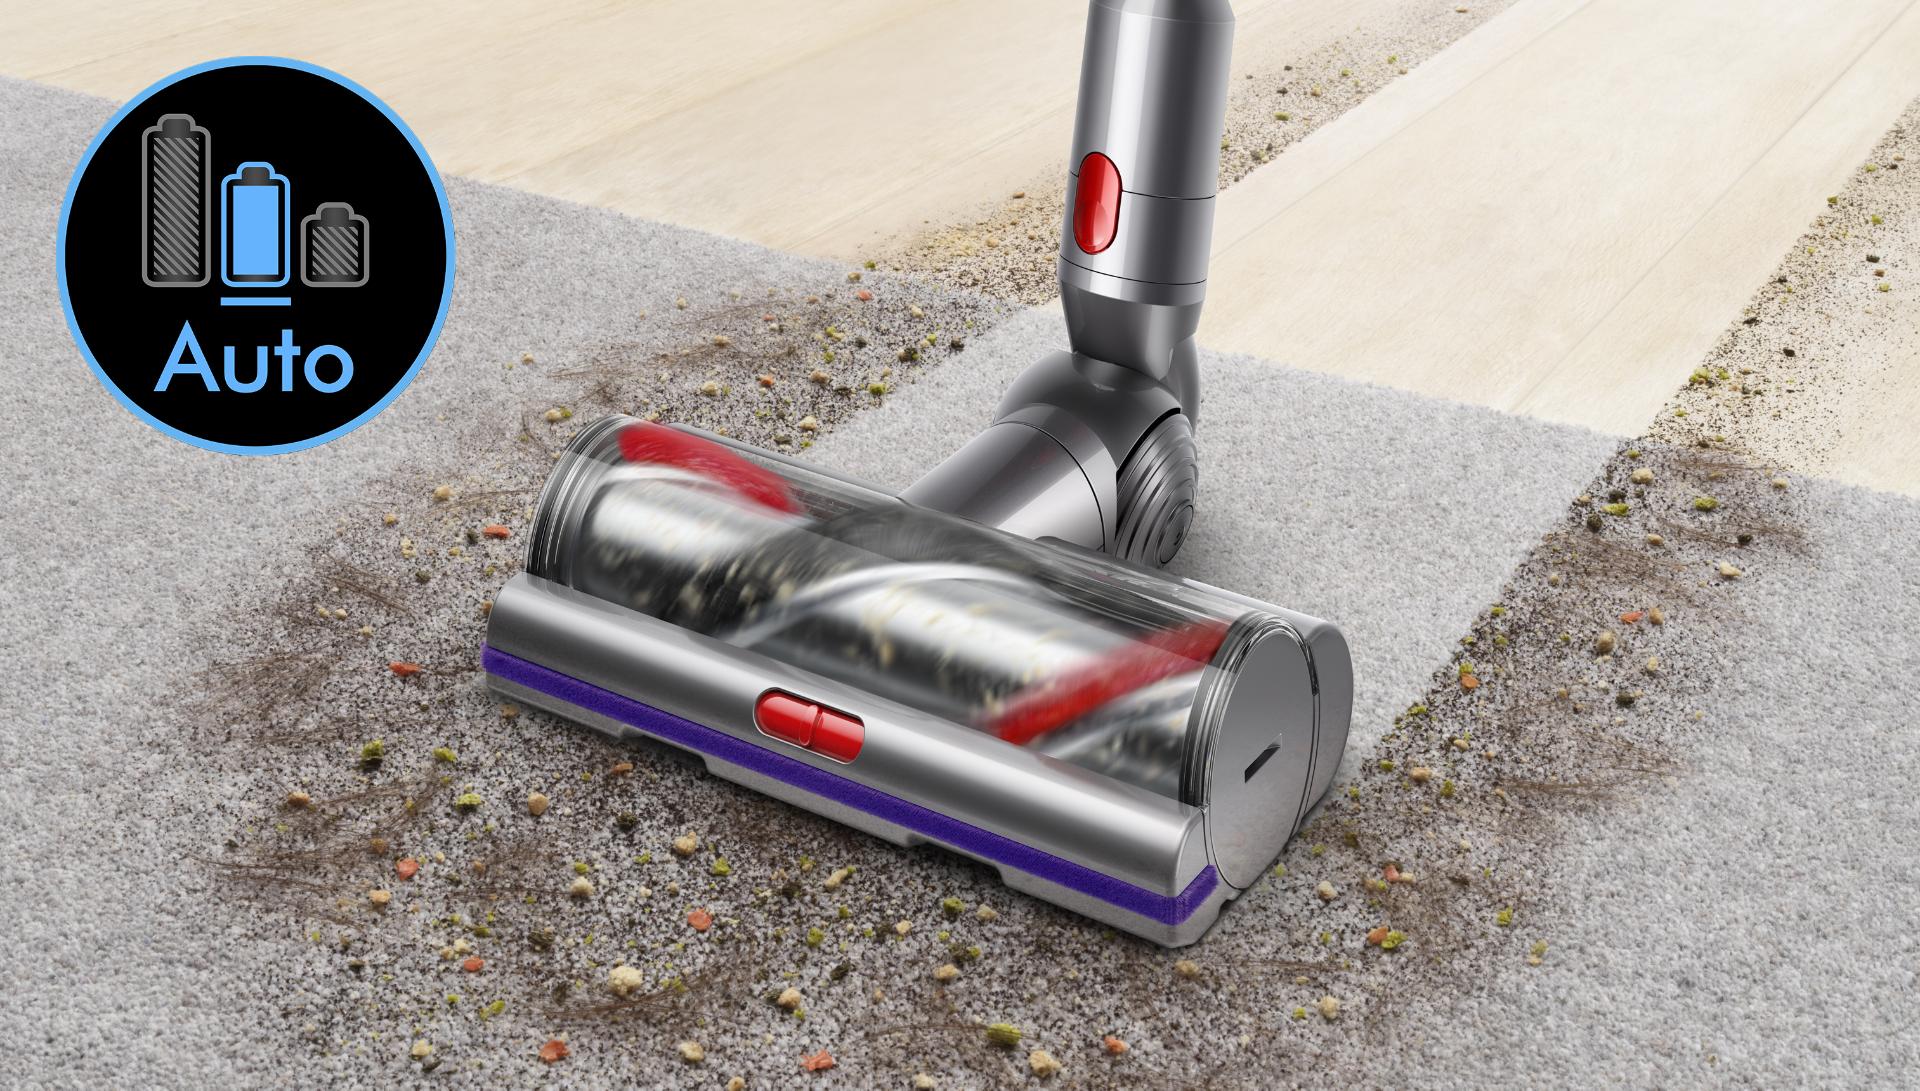 Digital Motorbar™  cleaner head moving from hard floor to carpet